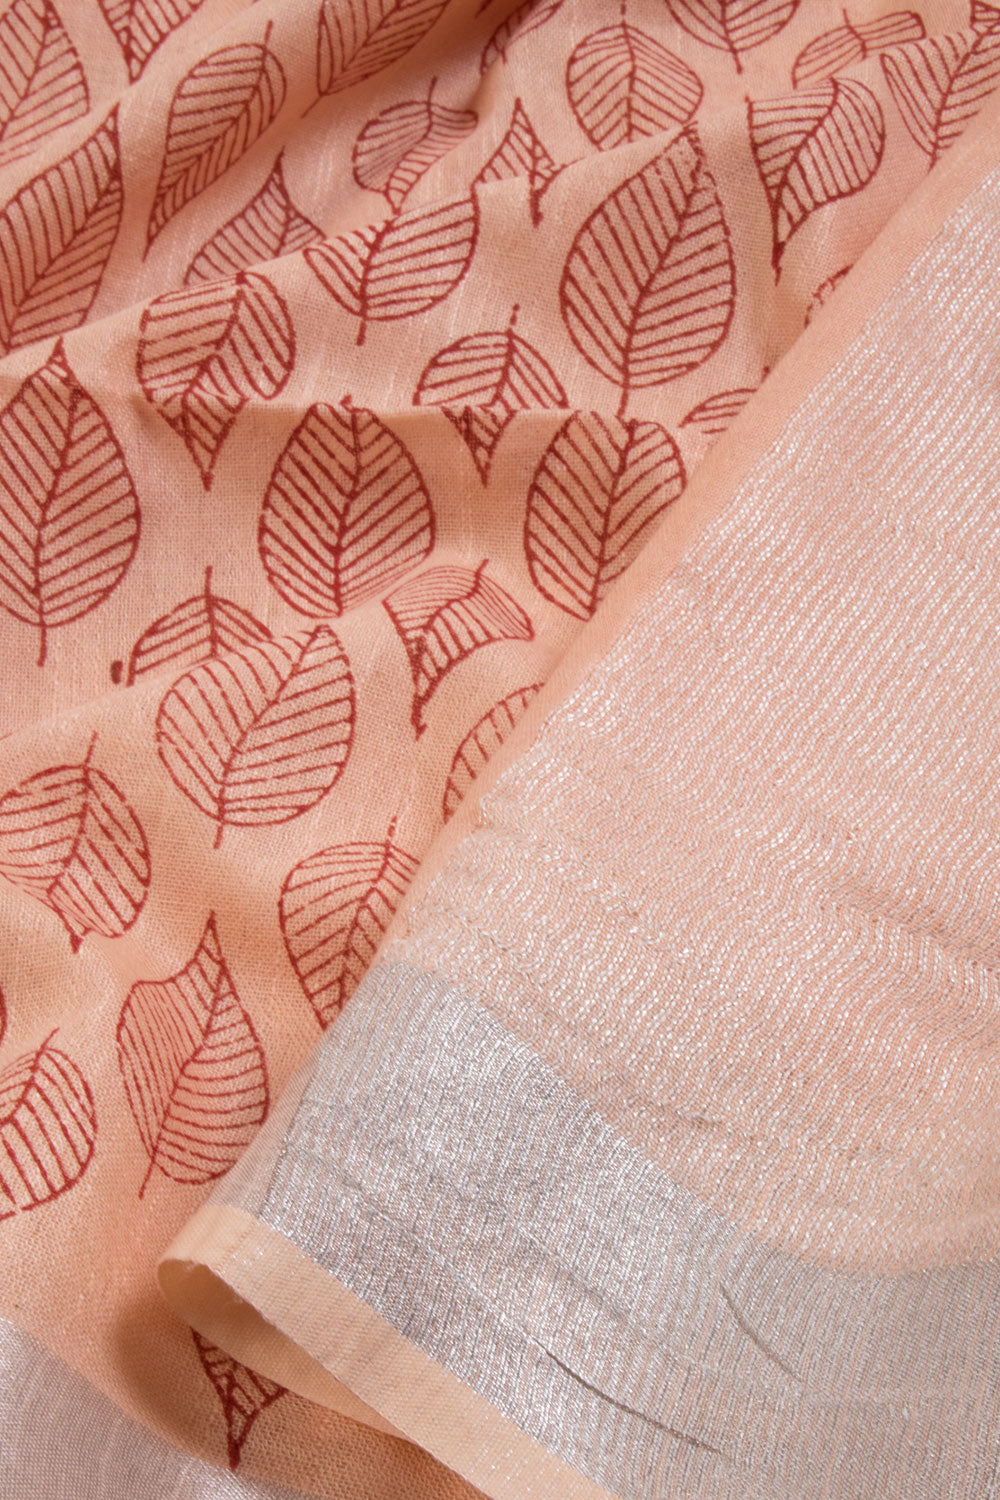 Peach Leaves Printed linen saree - Avishya